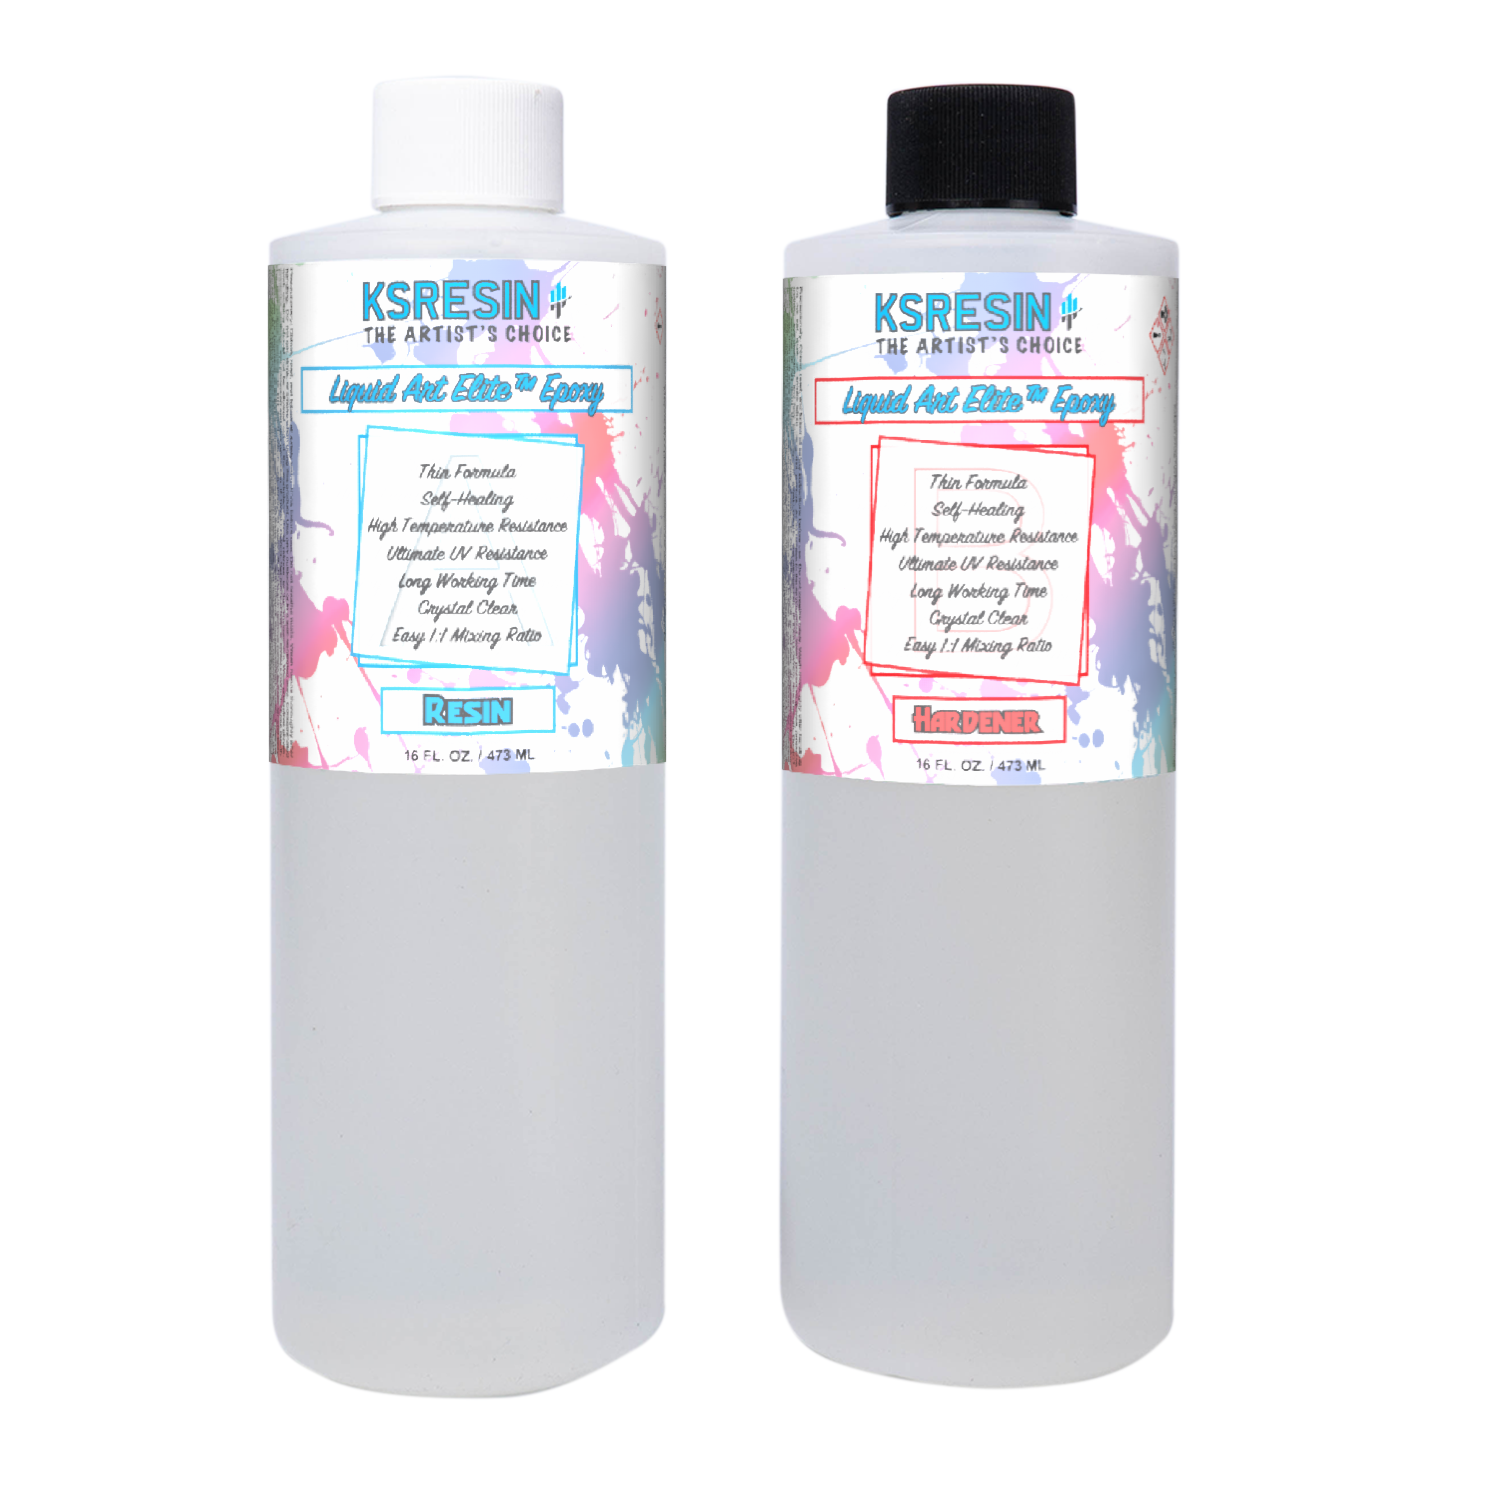 32 OZ. Epoxy Resin, Crystal Clear Epoxy Resin Kit for Art Coating